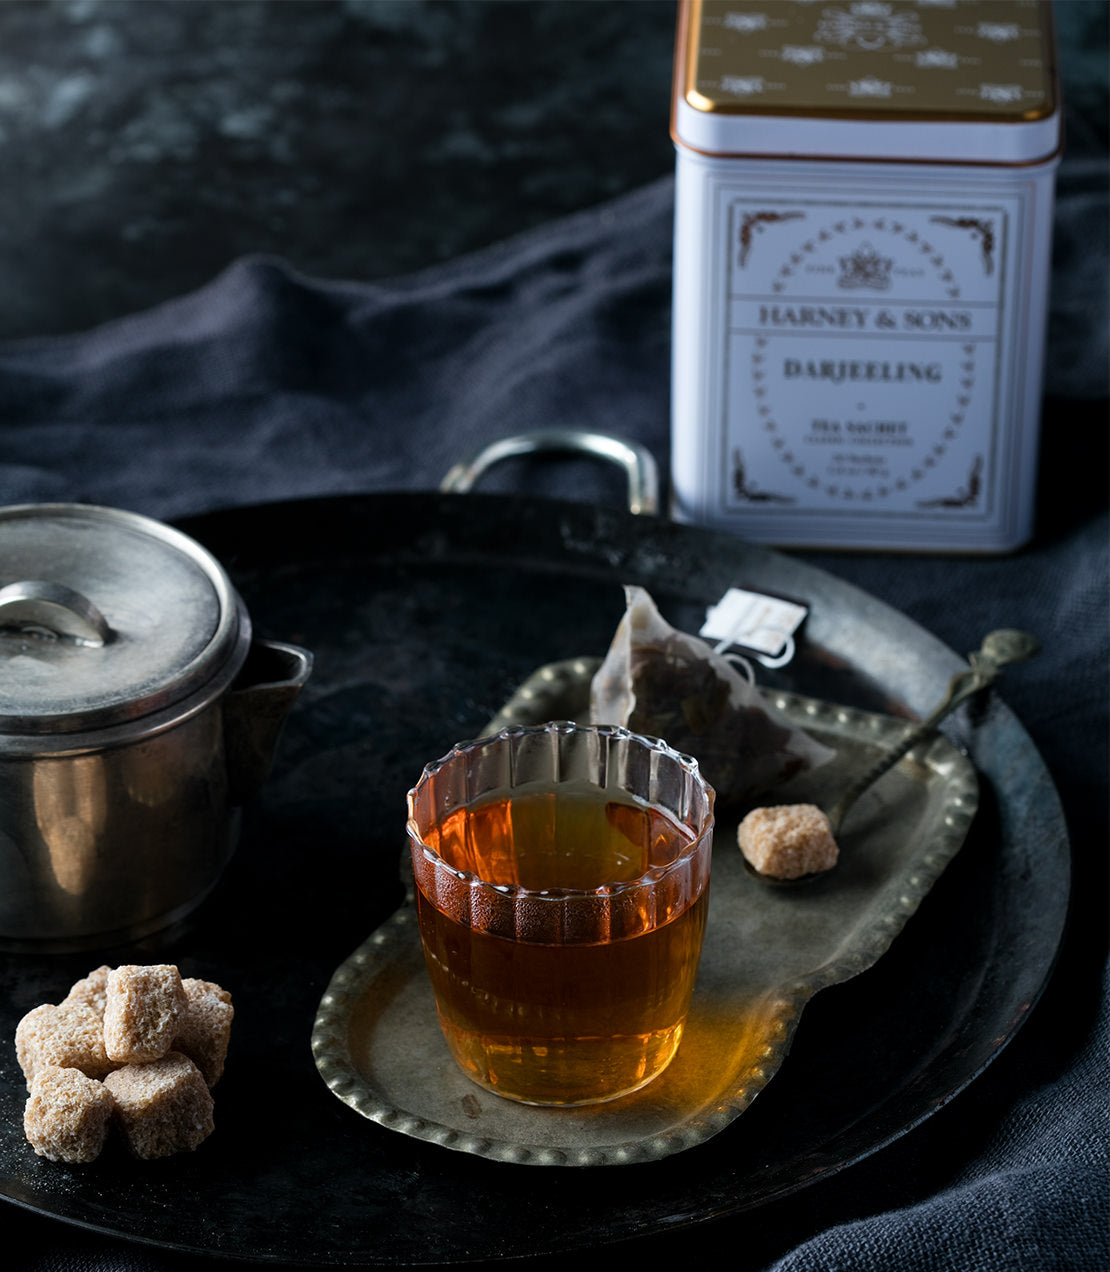 Darjeeling Tea in Tea 